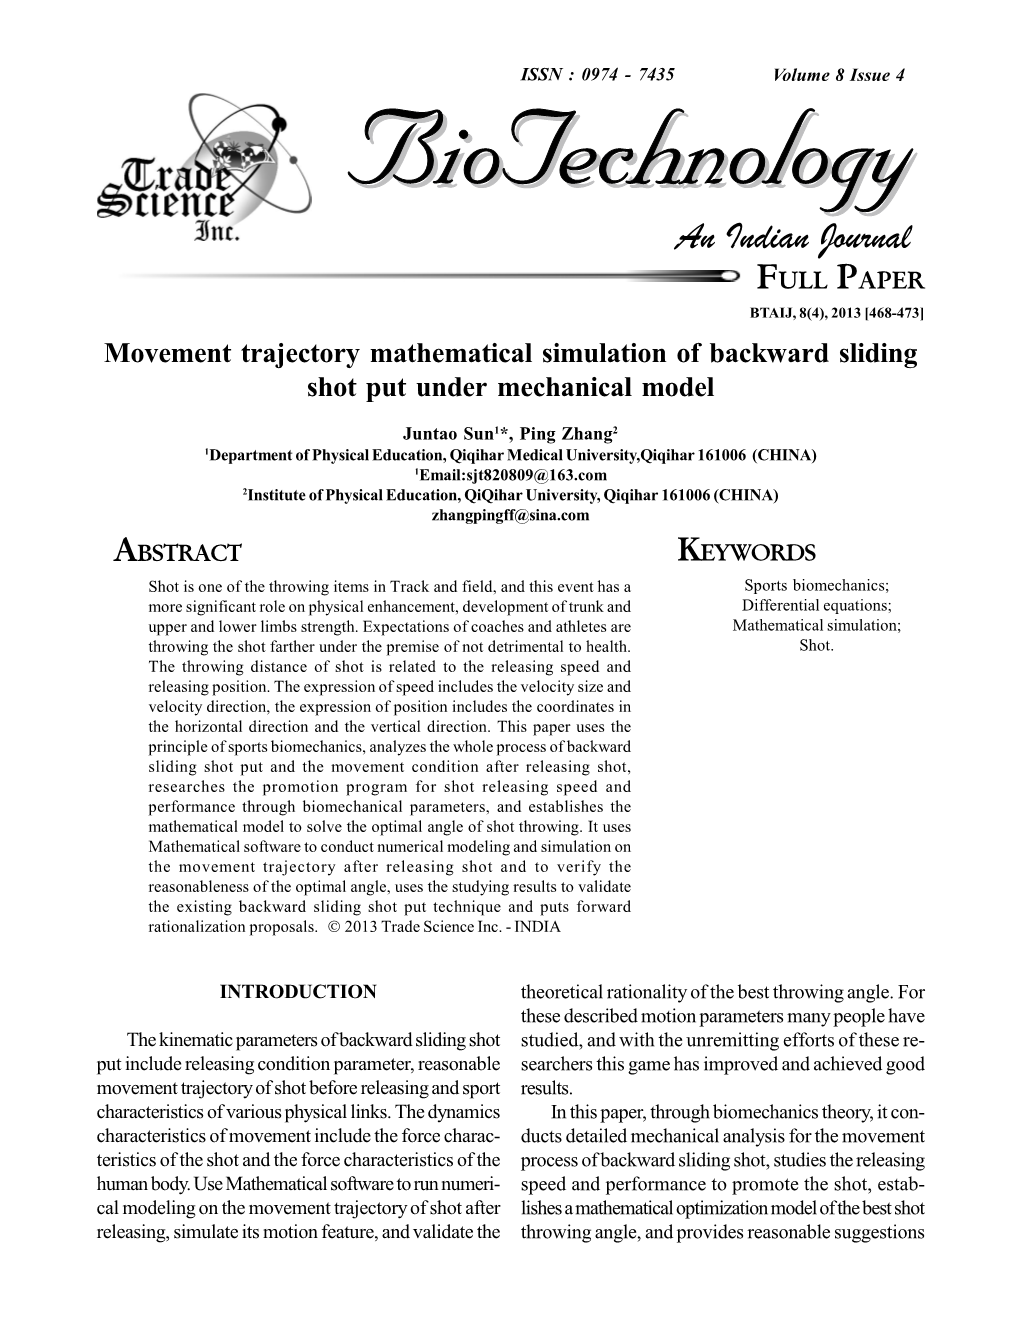 Movement Trajectory Mathematical Simulation of Backward Sliding Shot Put Under Mechanical Model